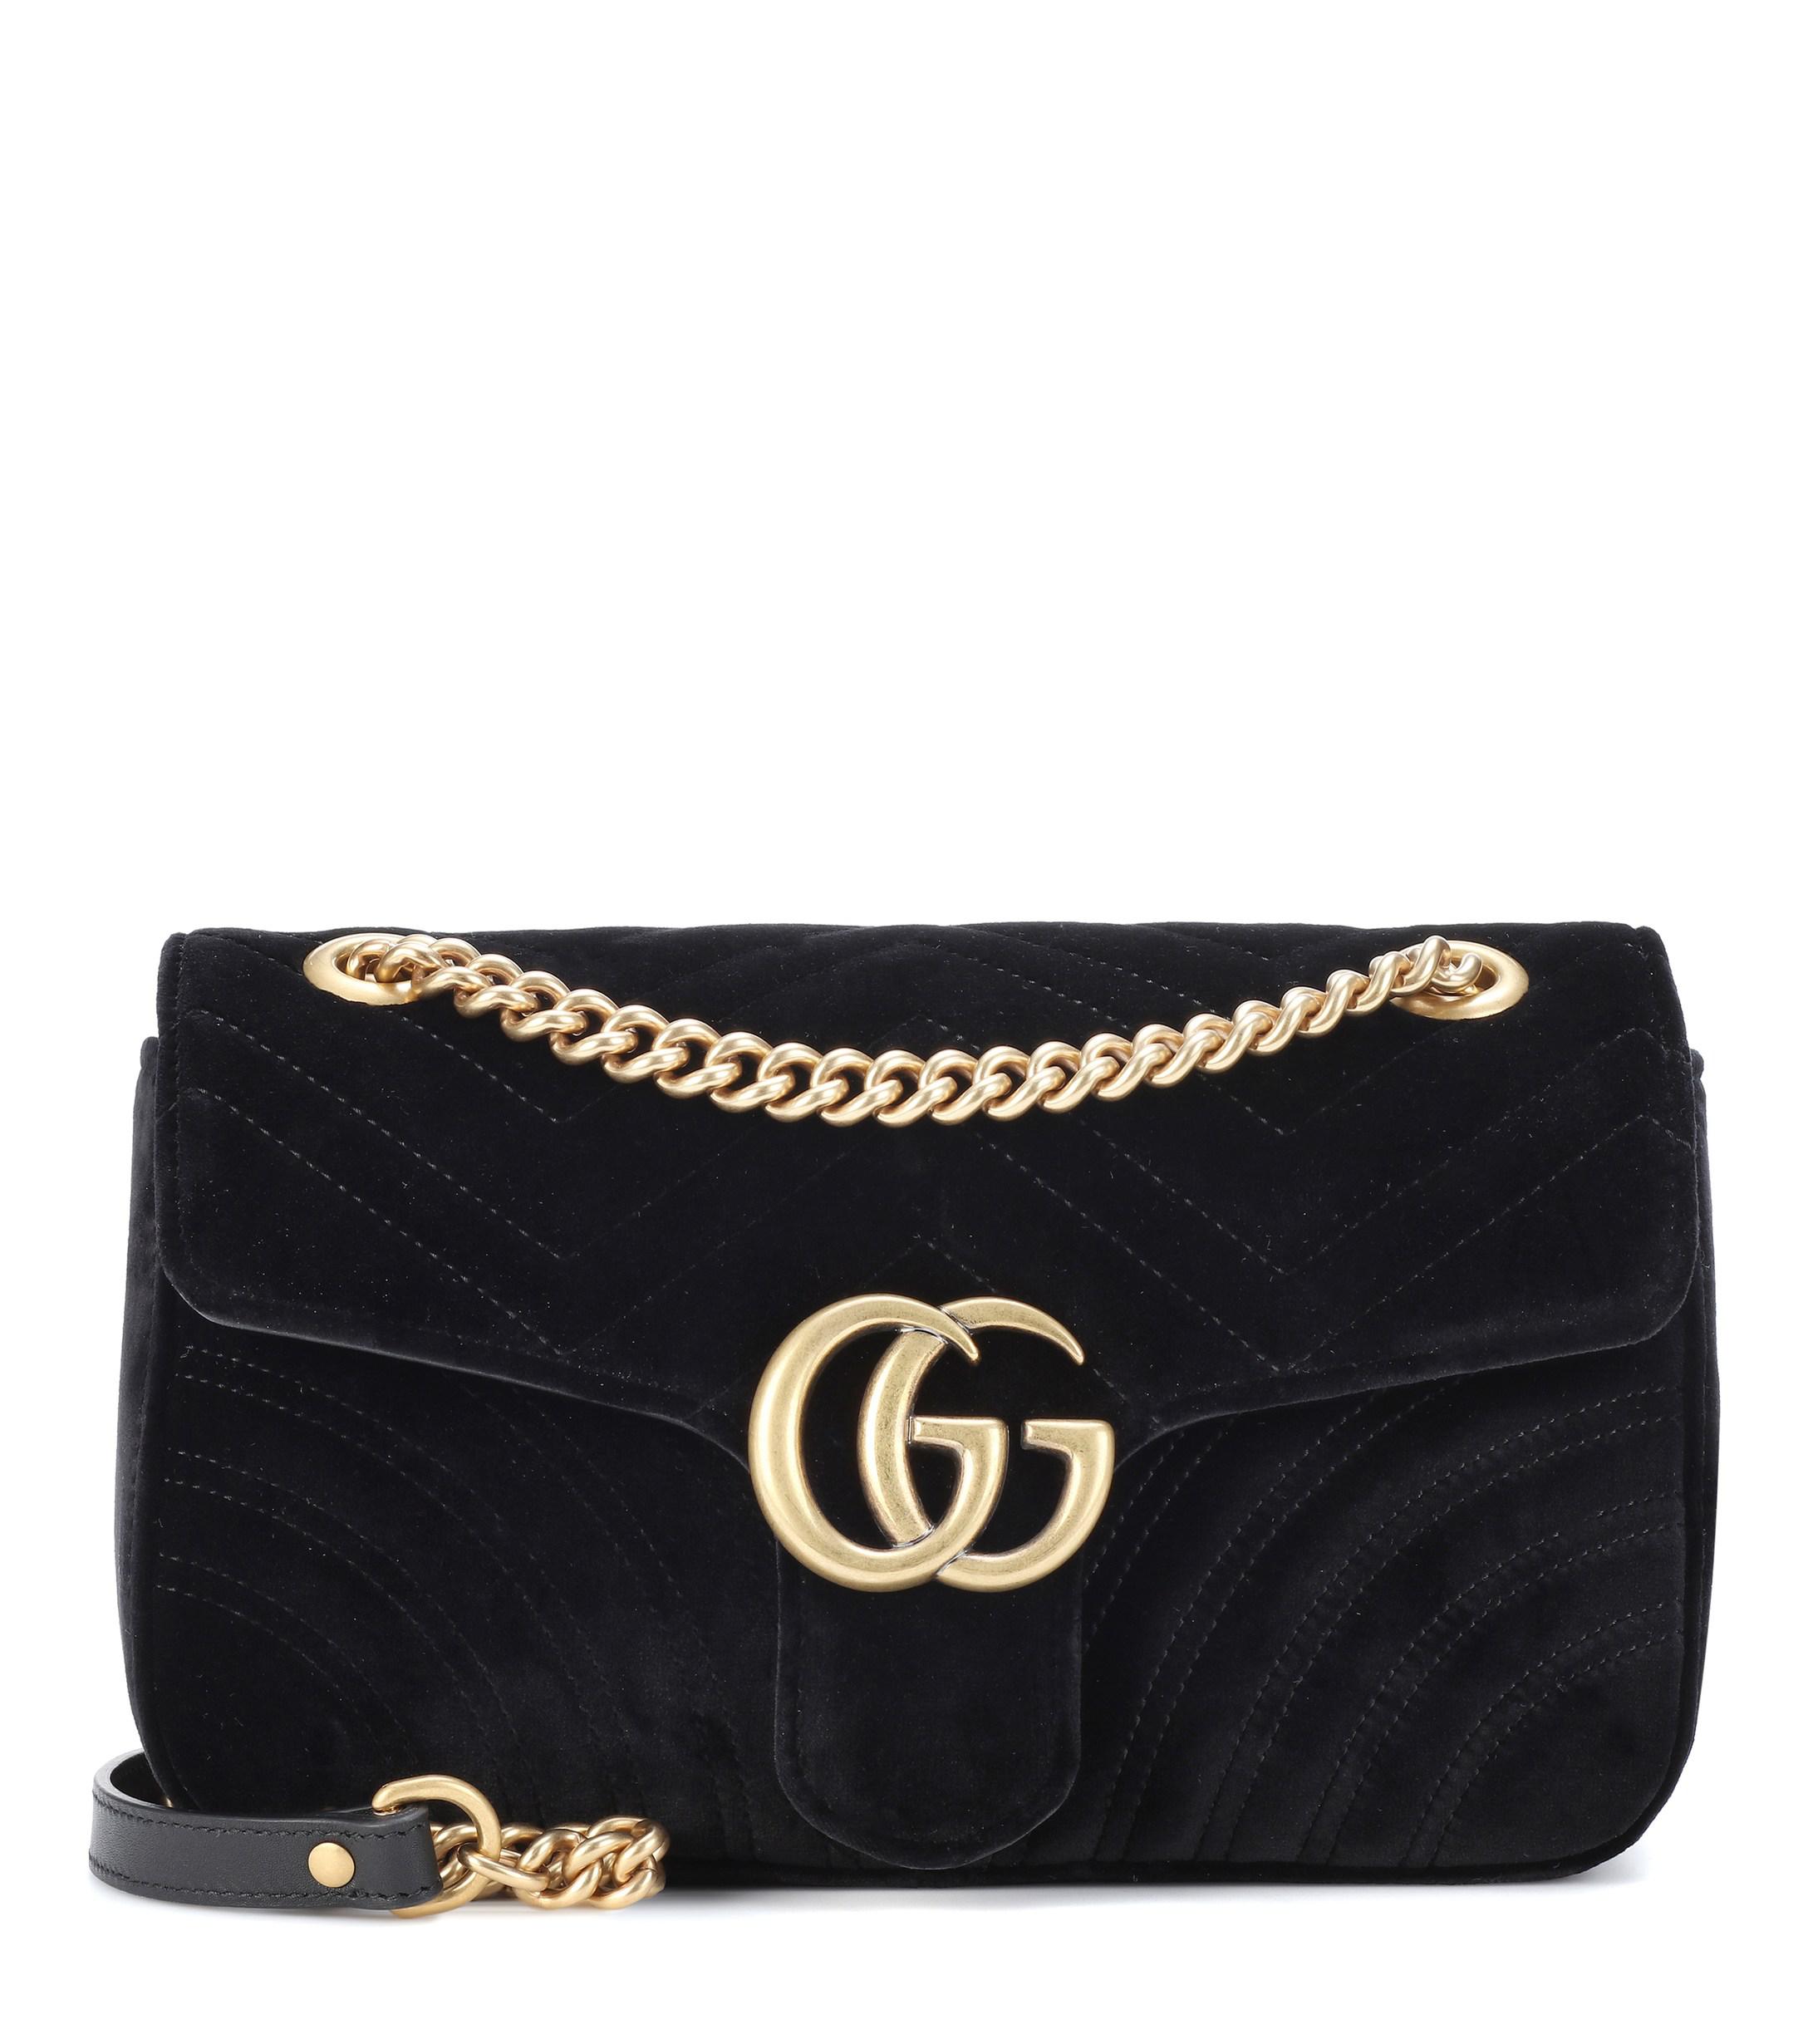 Gucci GG Marmont Small Velvet Shoulder Bag in Nero (Black) - Lyst